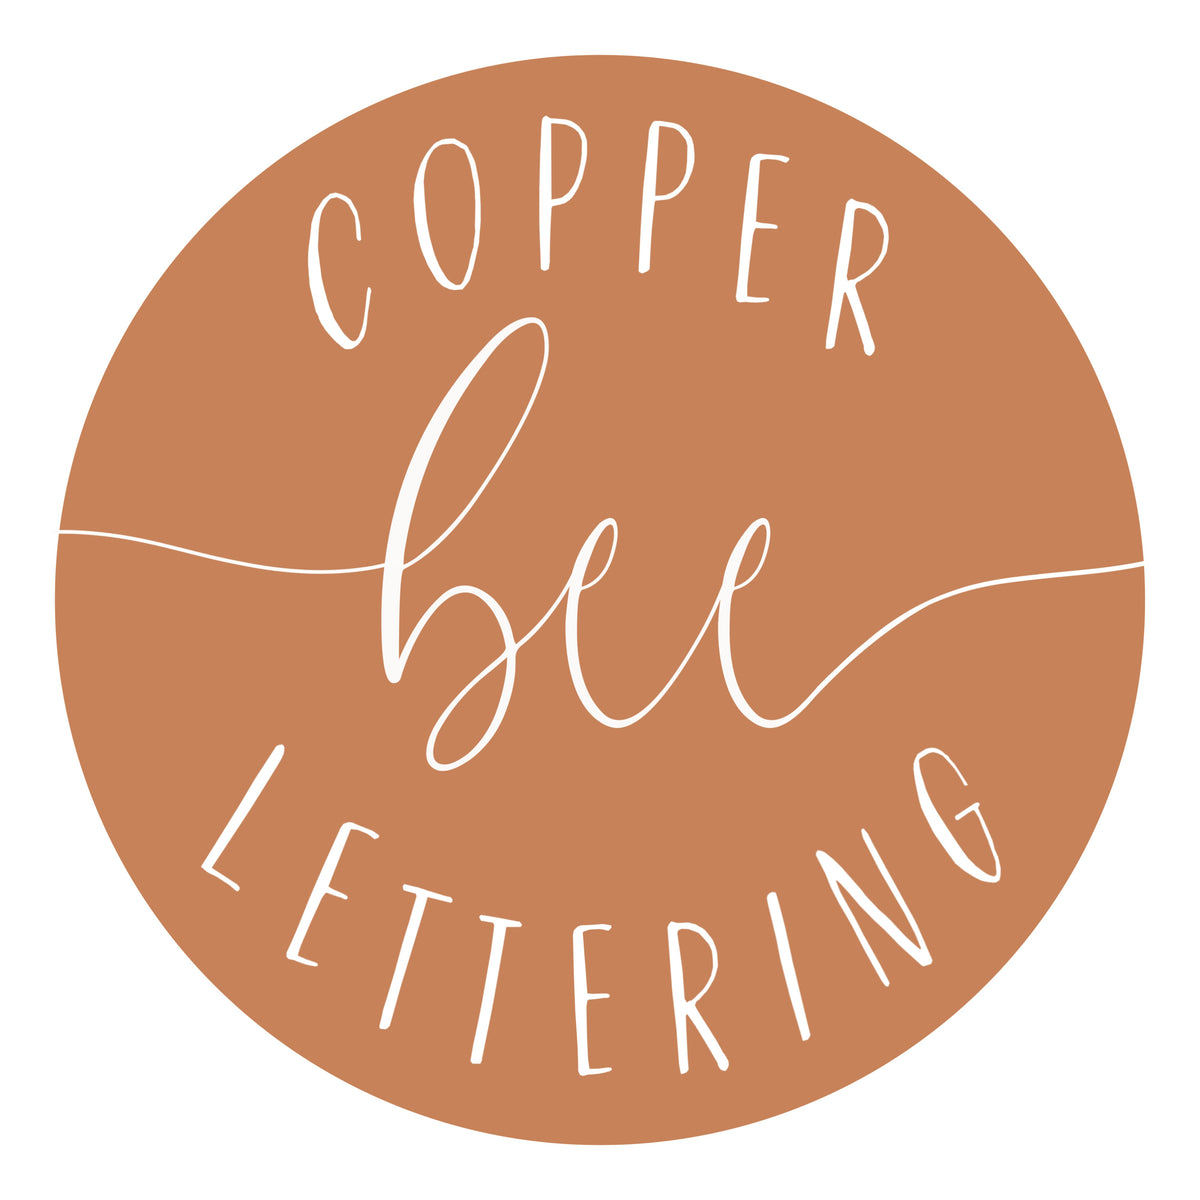 Heart wax seals – Copper Bee Lettering